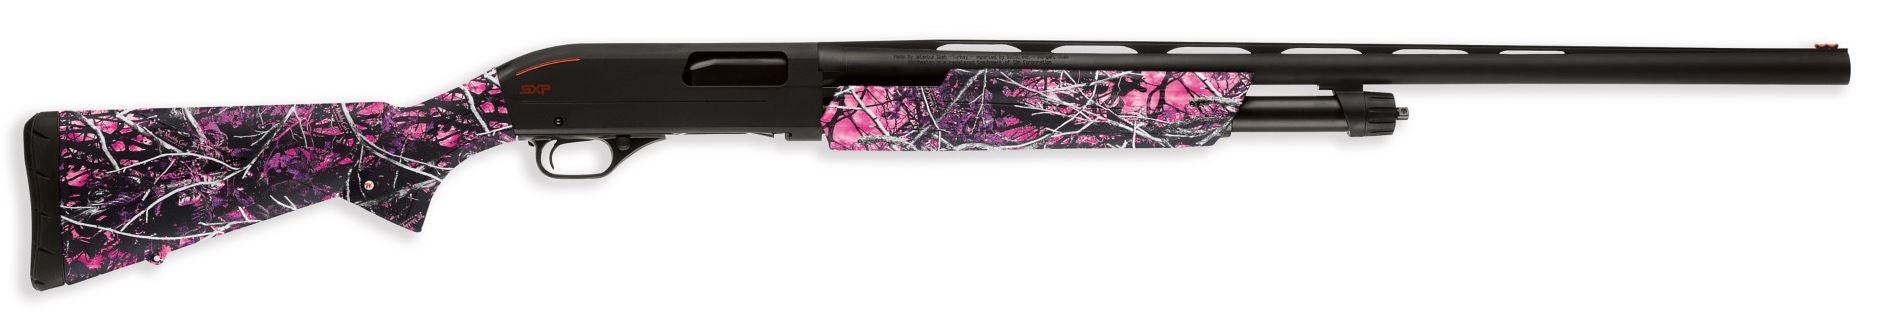 SXP Muddy Girl Defender Pump-Action Shotgun Winchester.